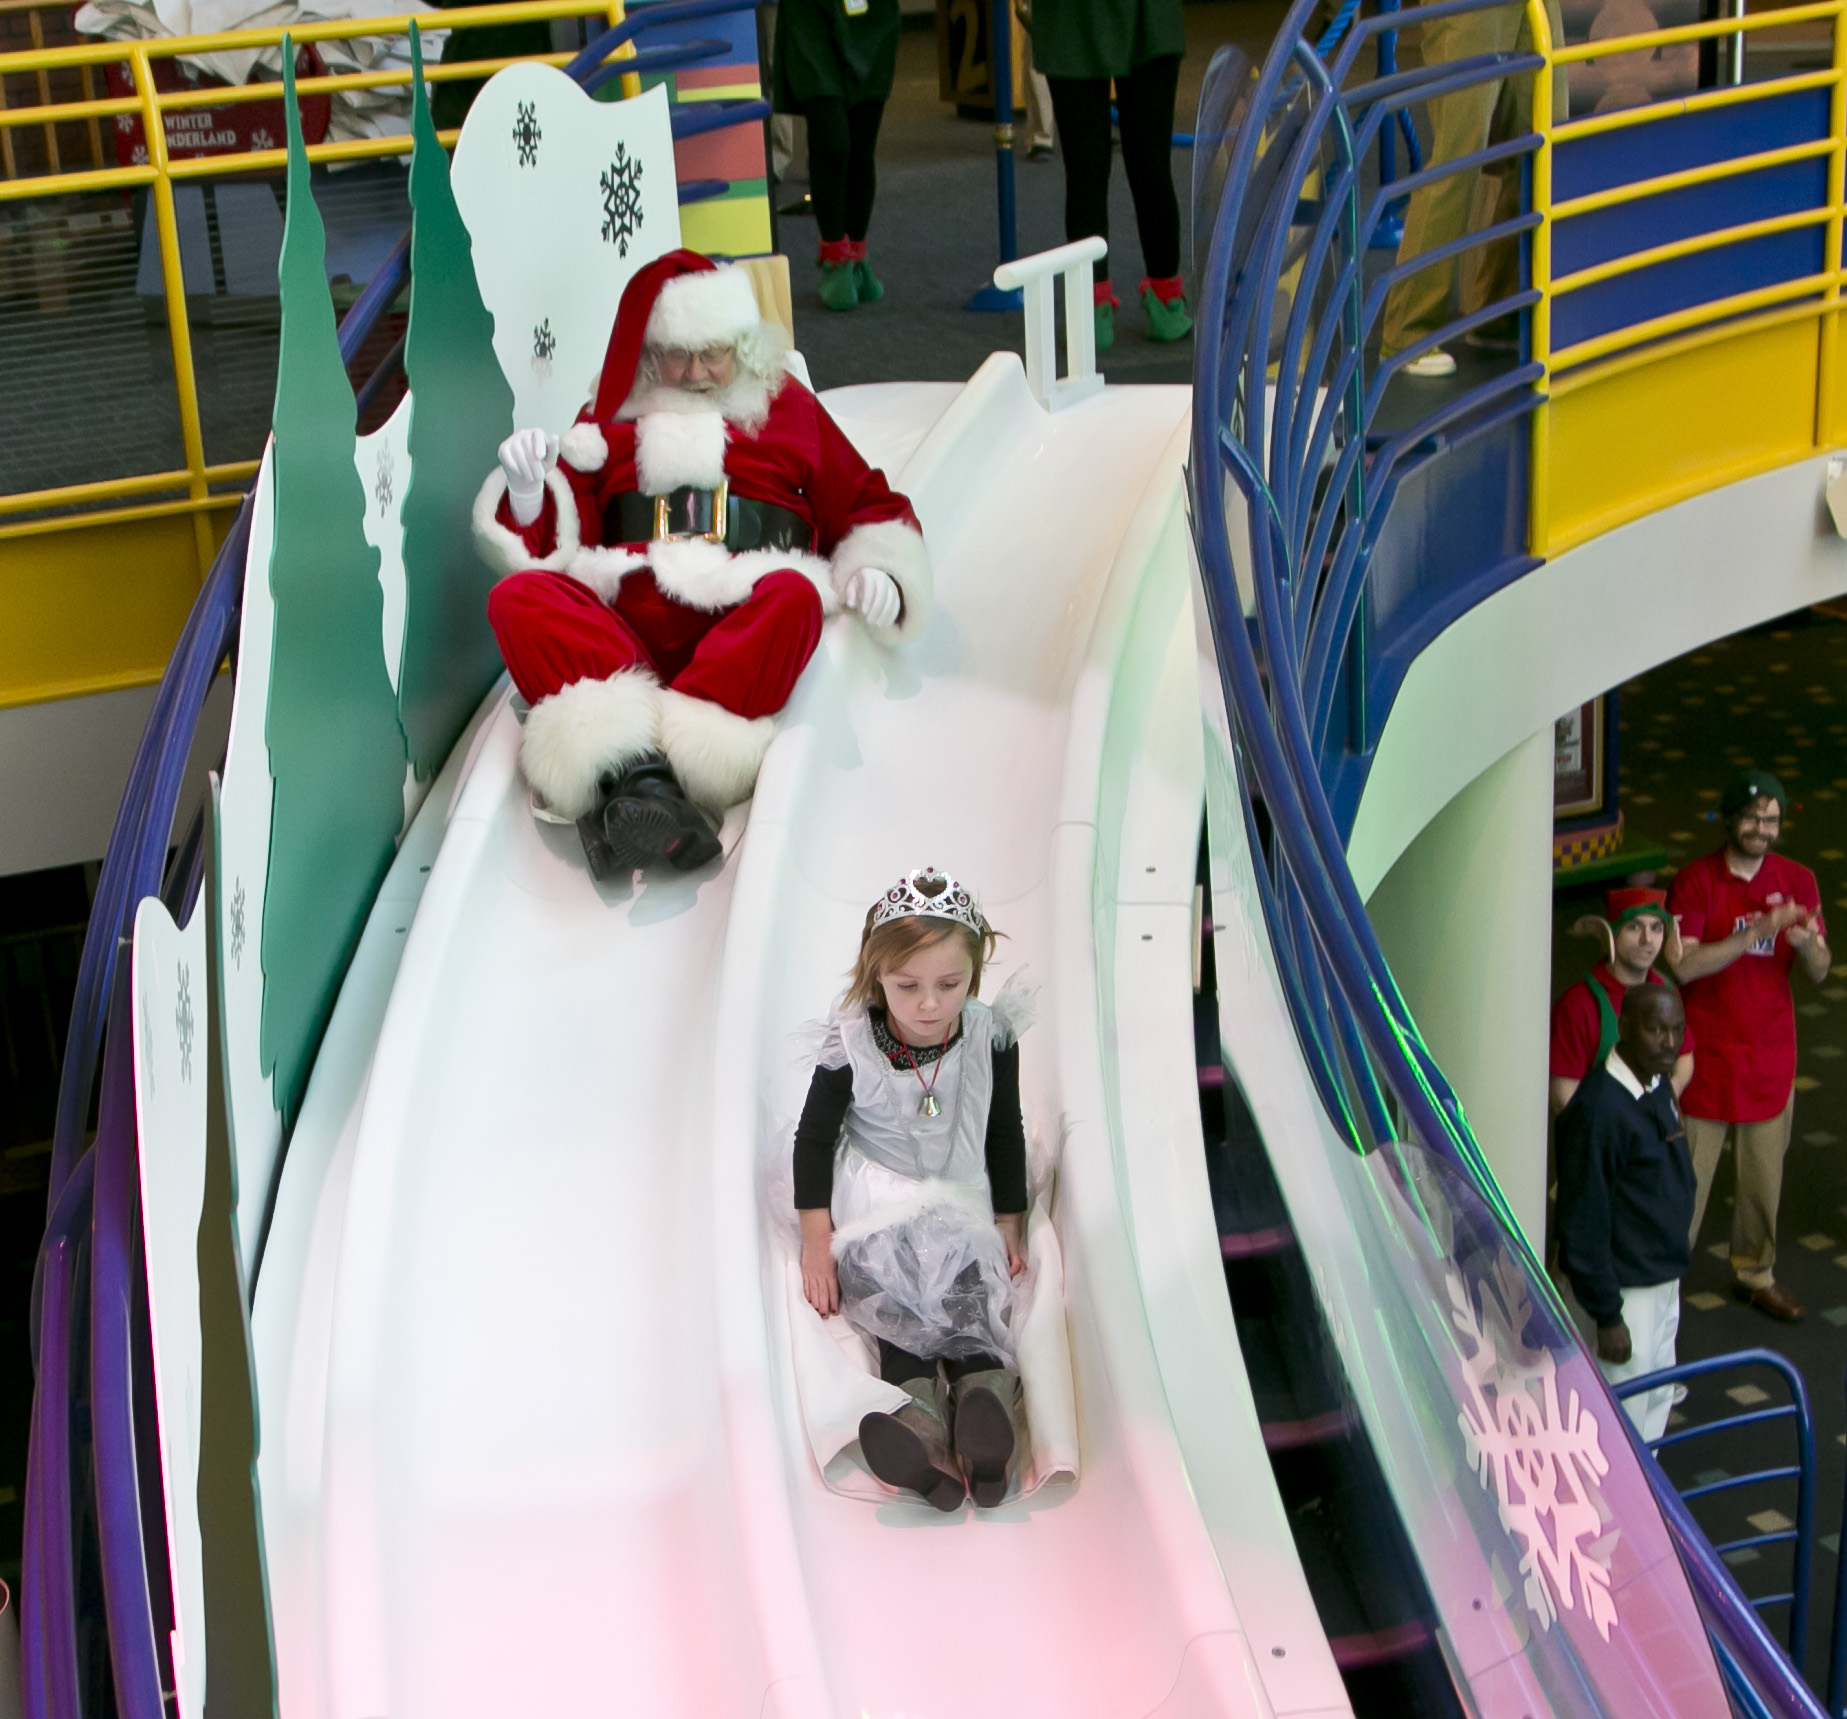 Santa slides down the Yule Slide with a little princess